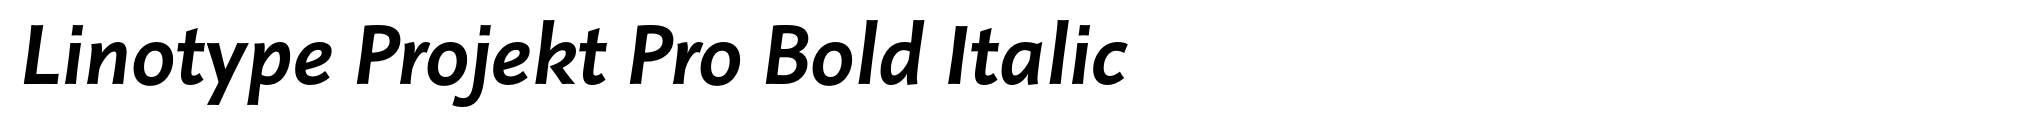 Linotype Projekt Pro Bold Italic image